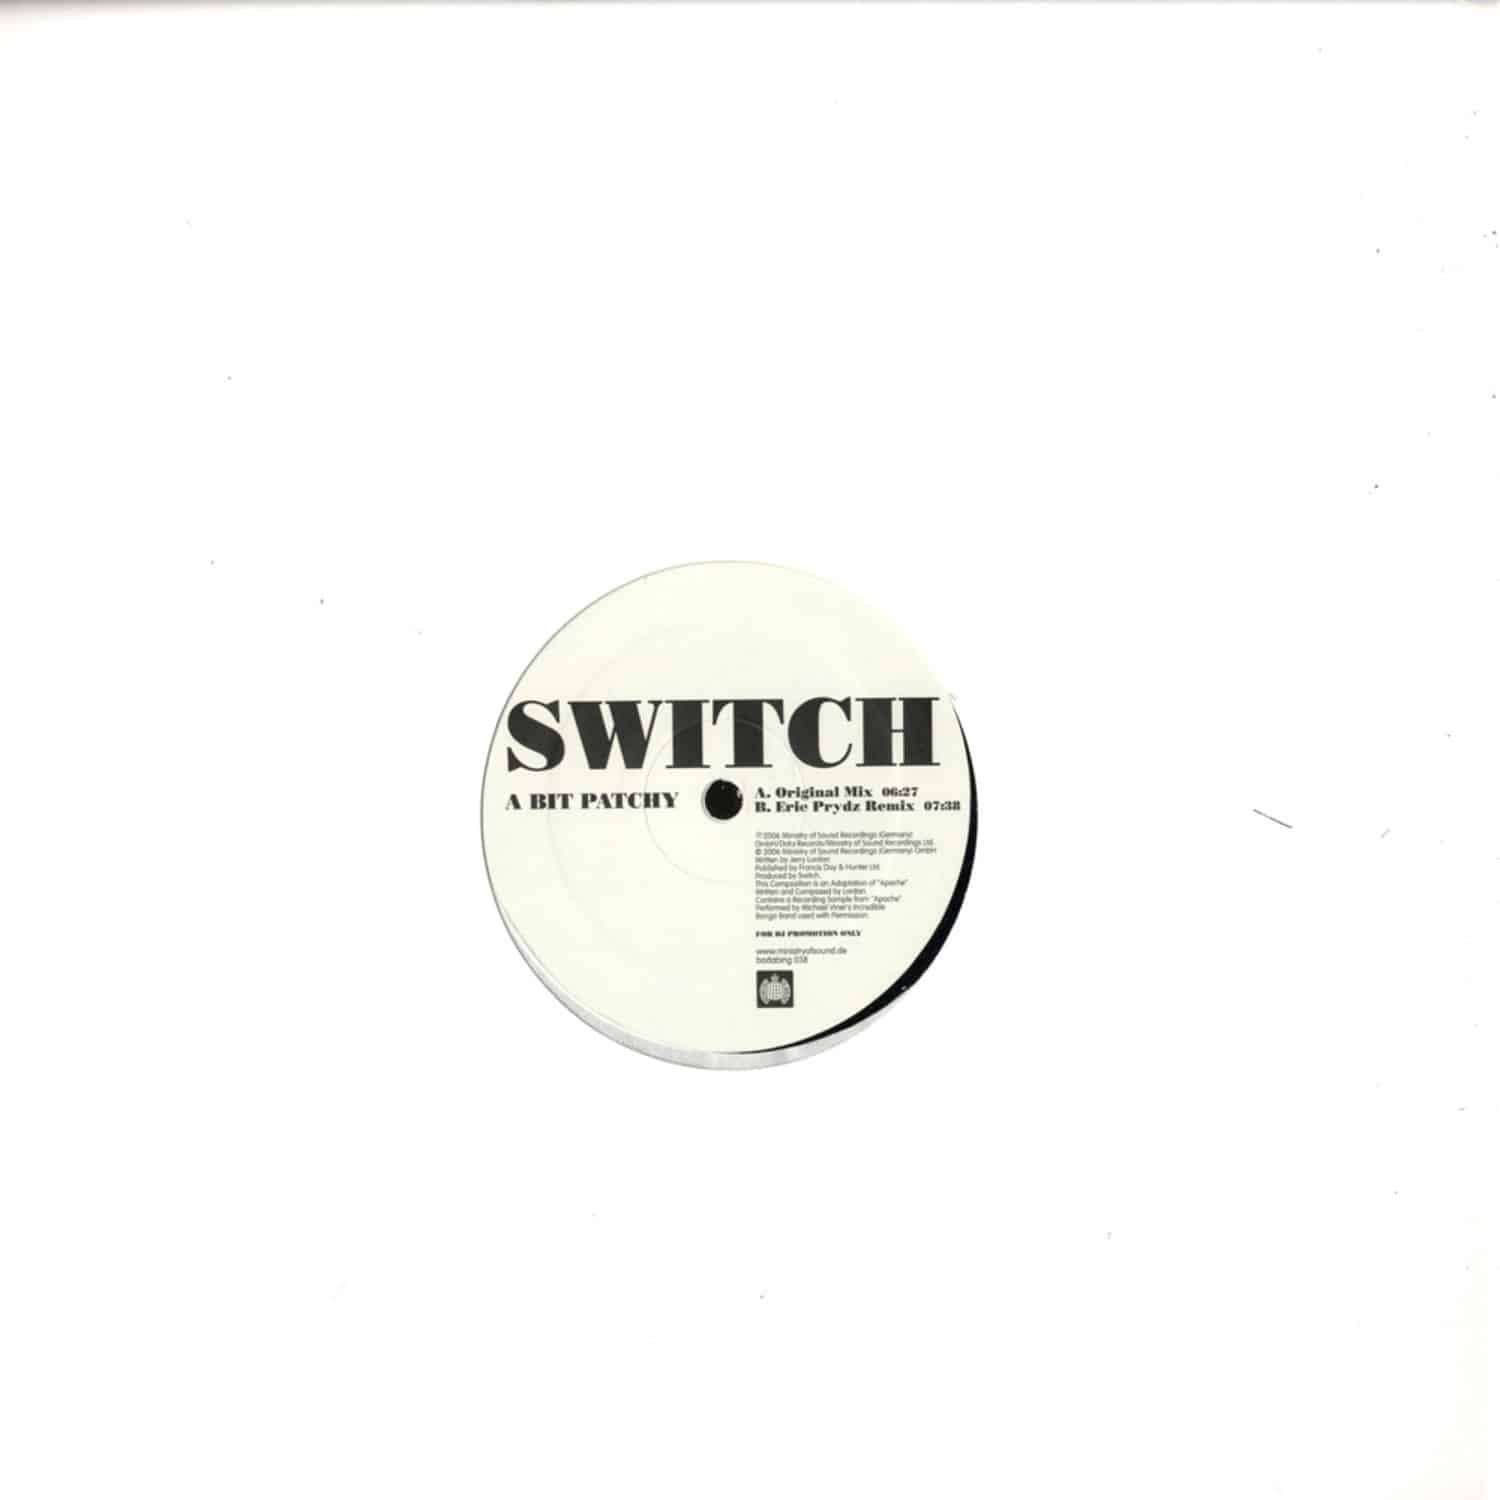 Switch - A BIT PATCHY / ERIC PRYDZ RMX